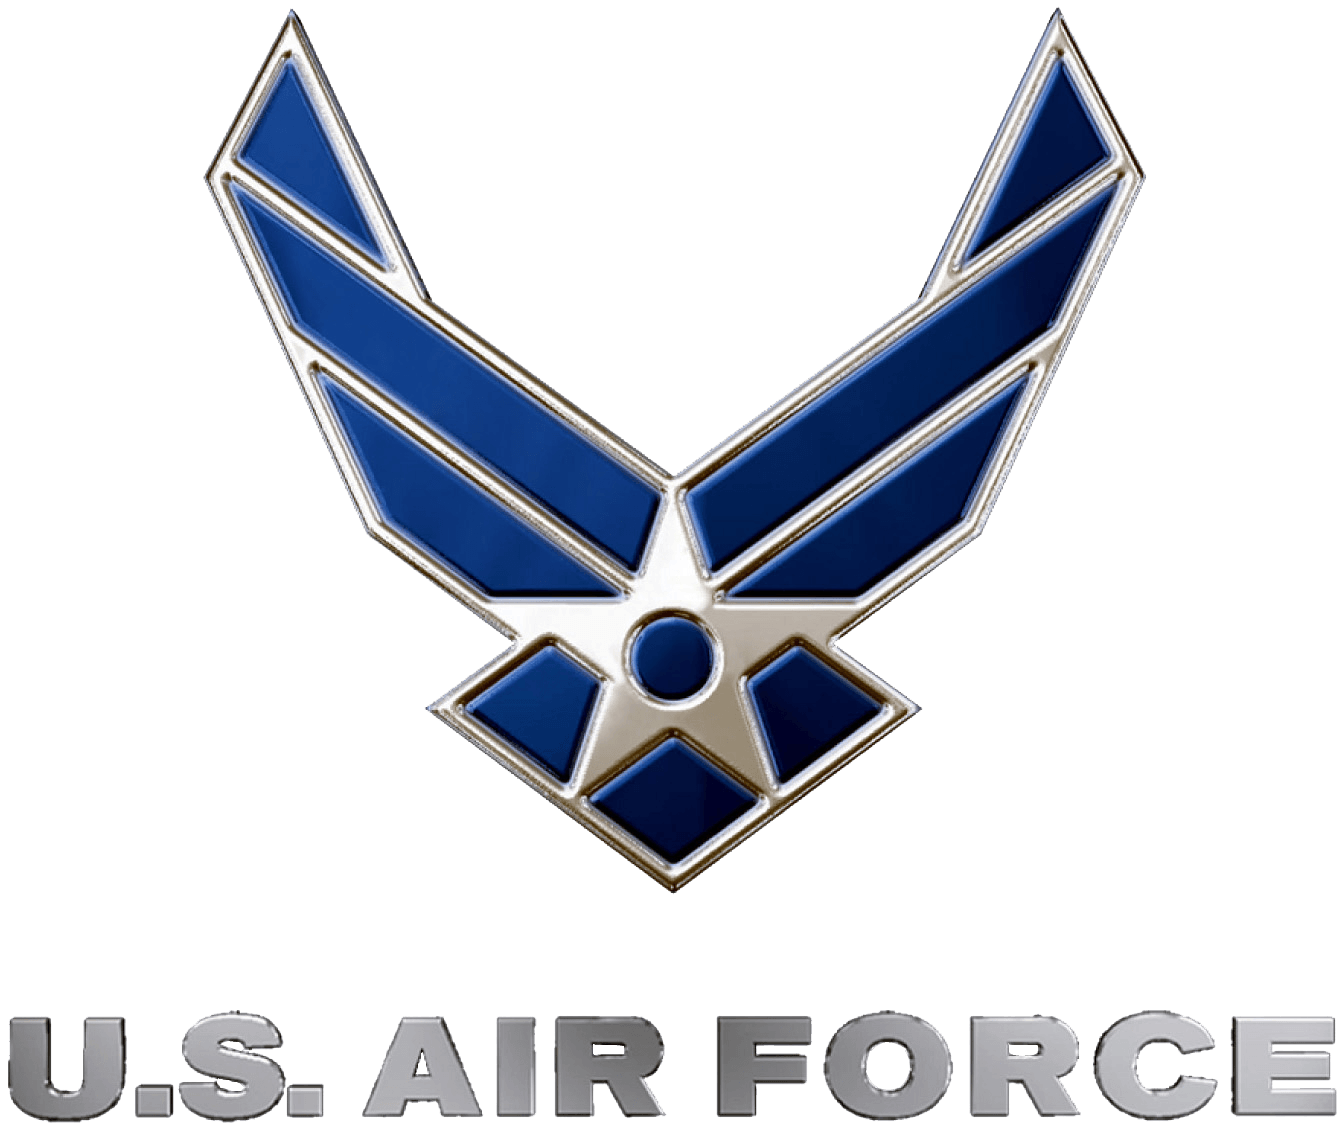 USAF logo 364177 Image HD Wallpaper. Wallfoy.com